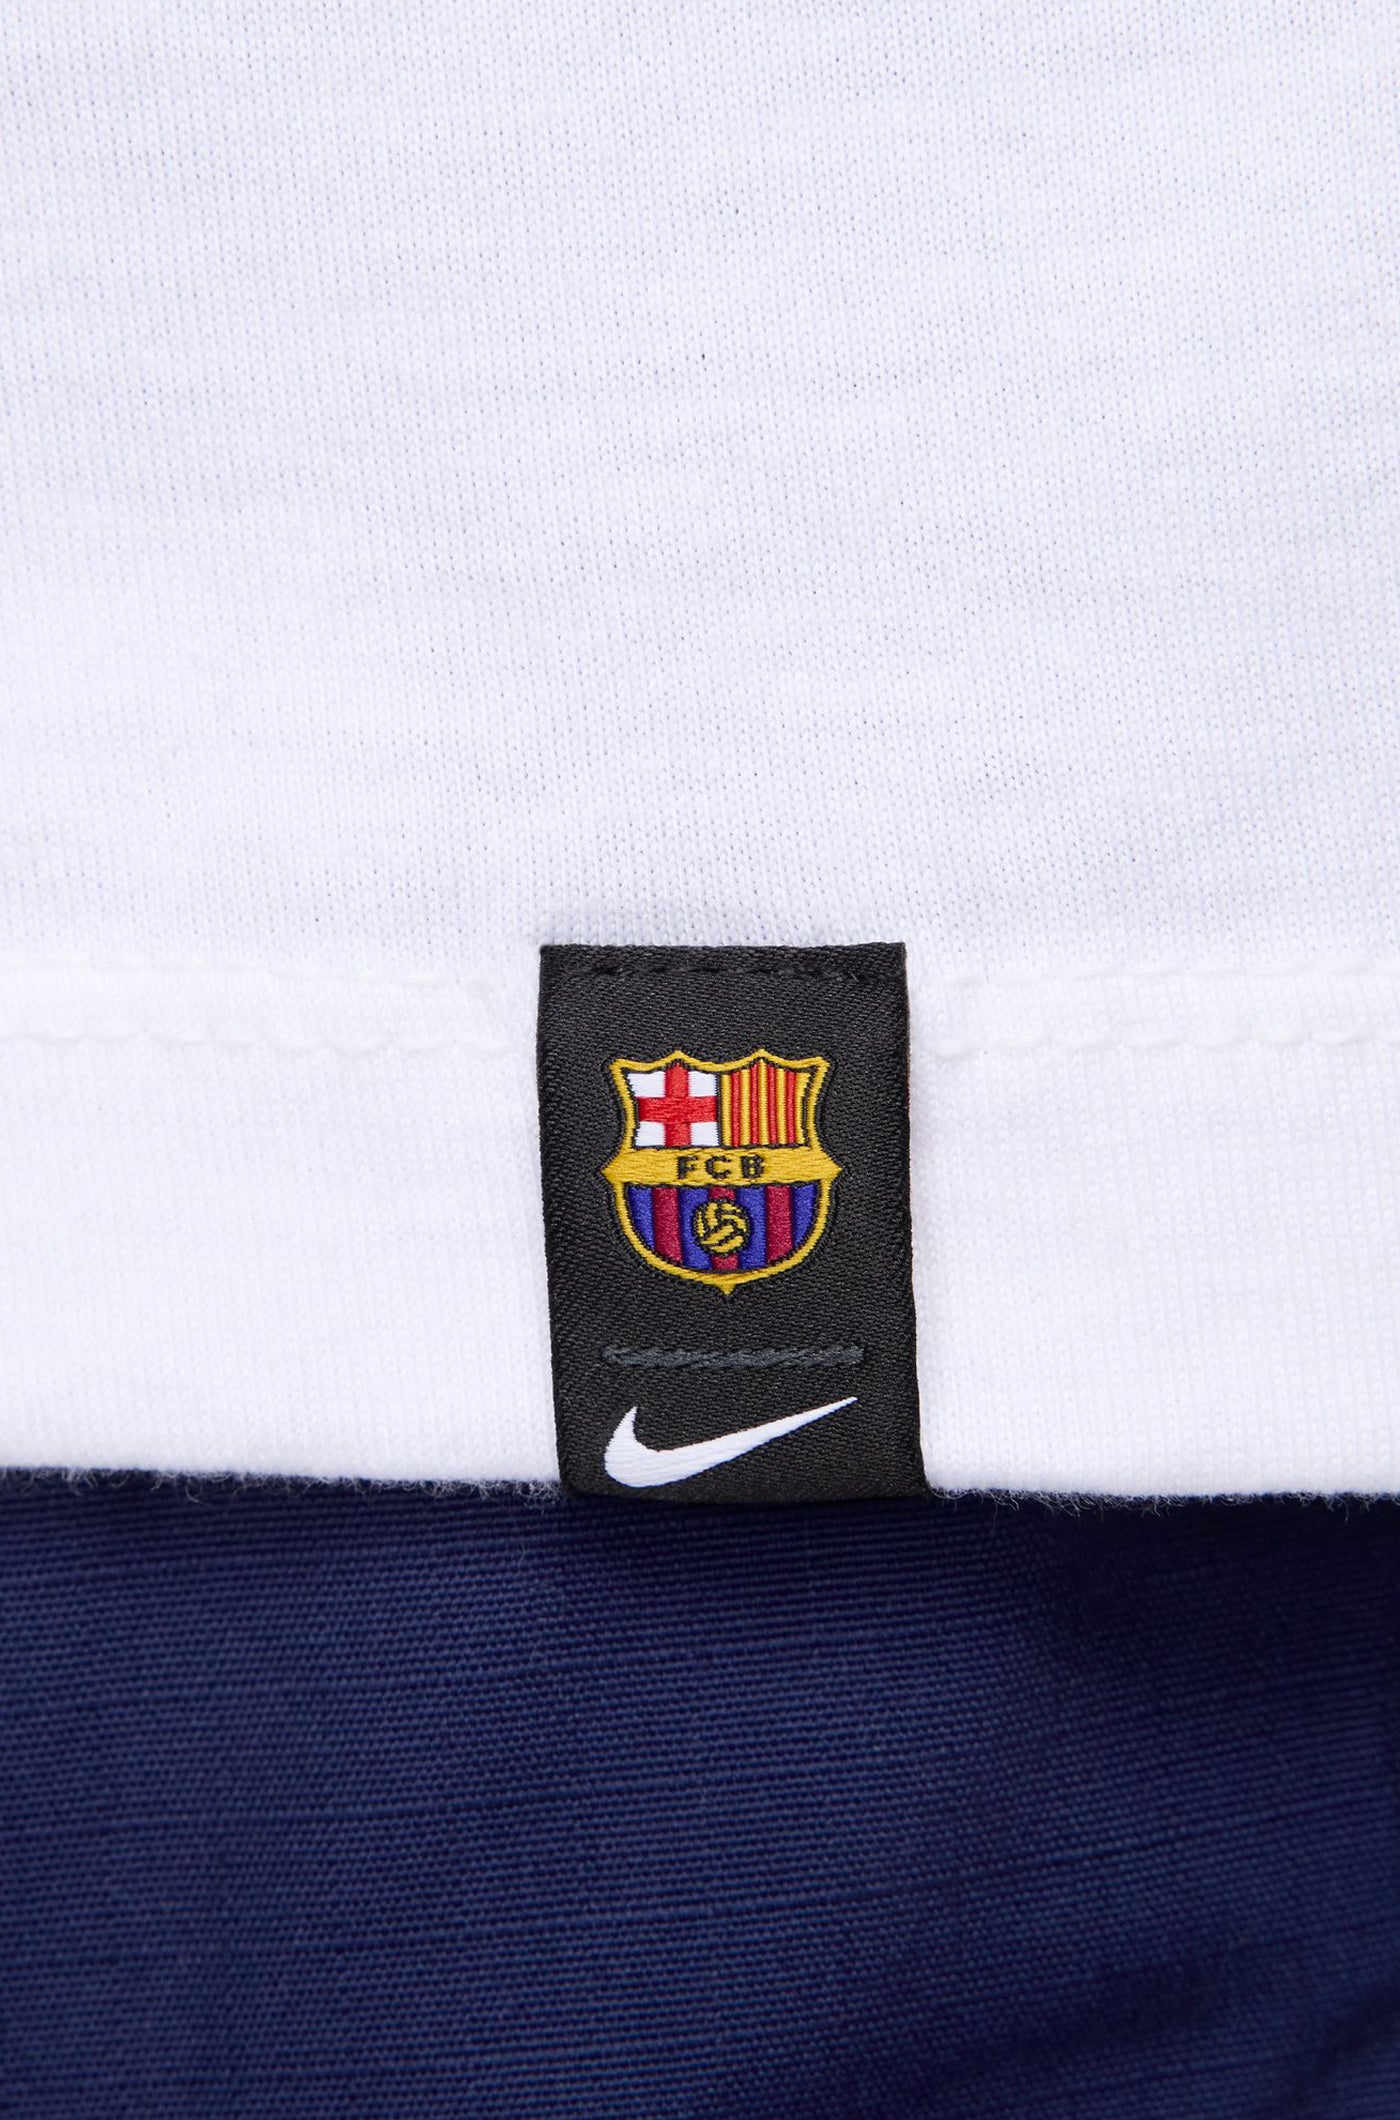 Camiseta blanca Barça Nike